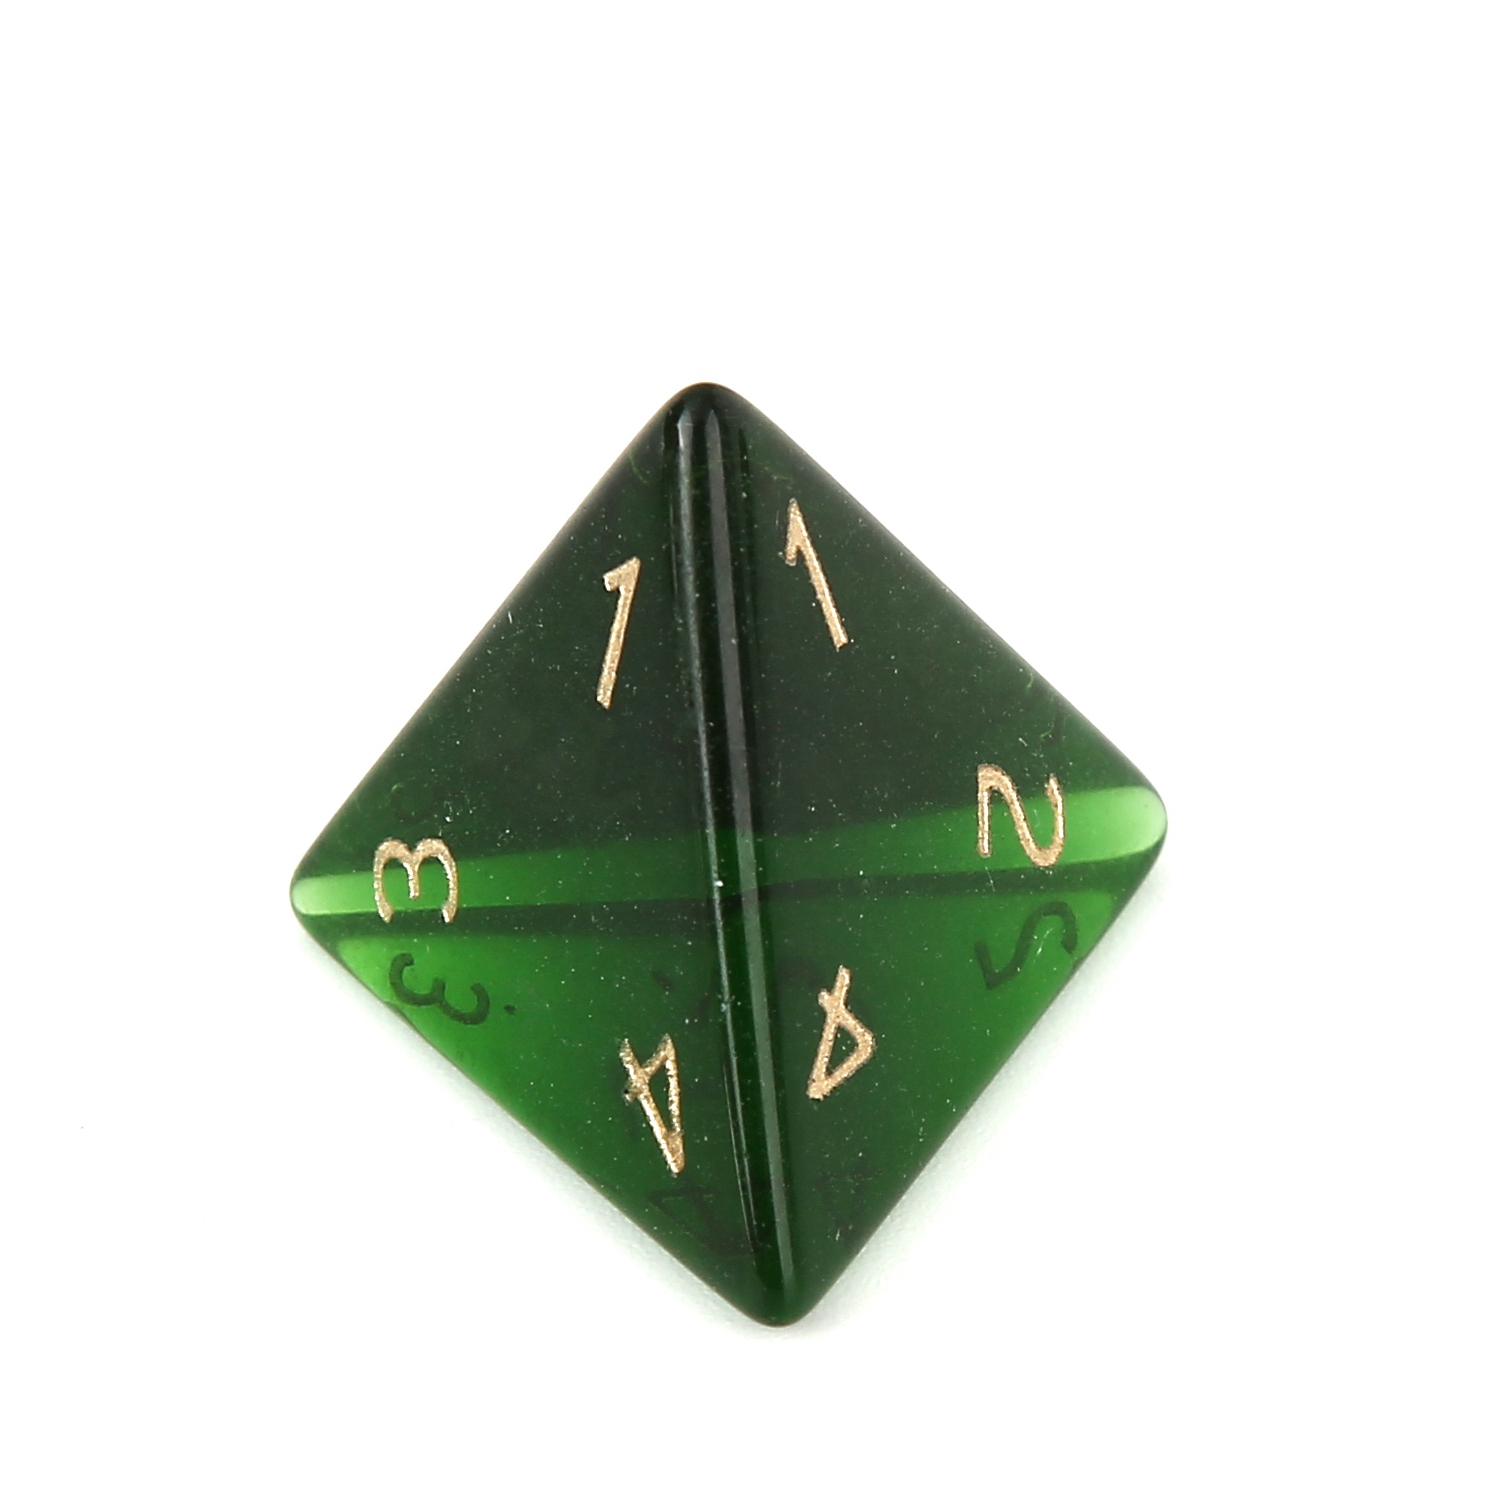 1:D4 icosahedron